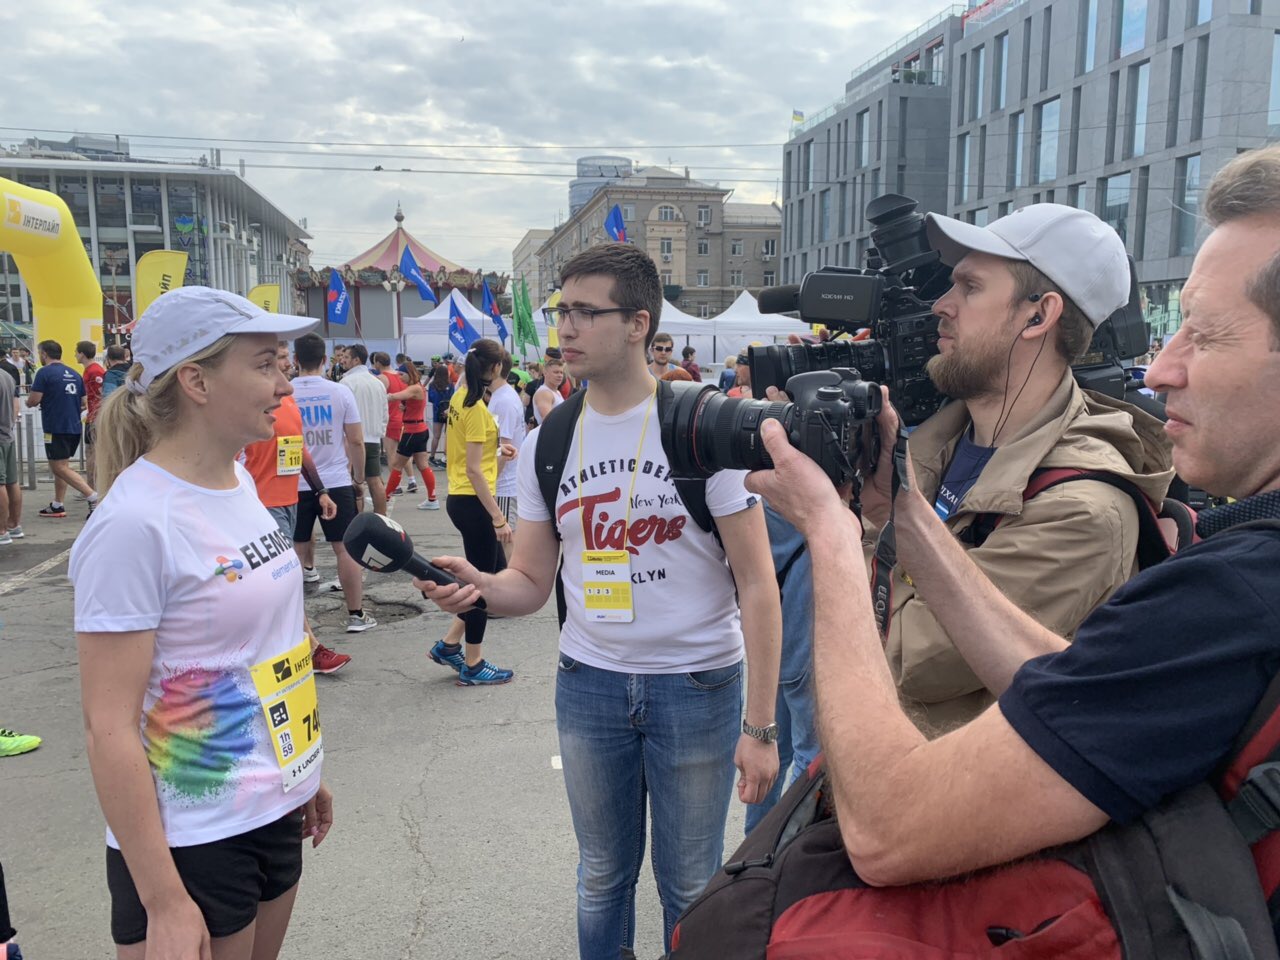 Команда Element стала участником в Interpipe Dnipro Half Marathon 